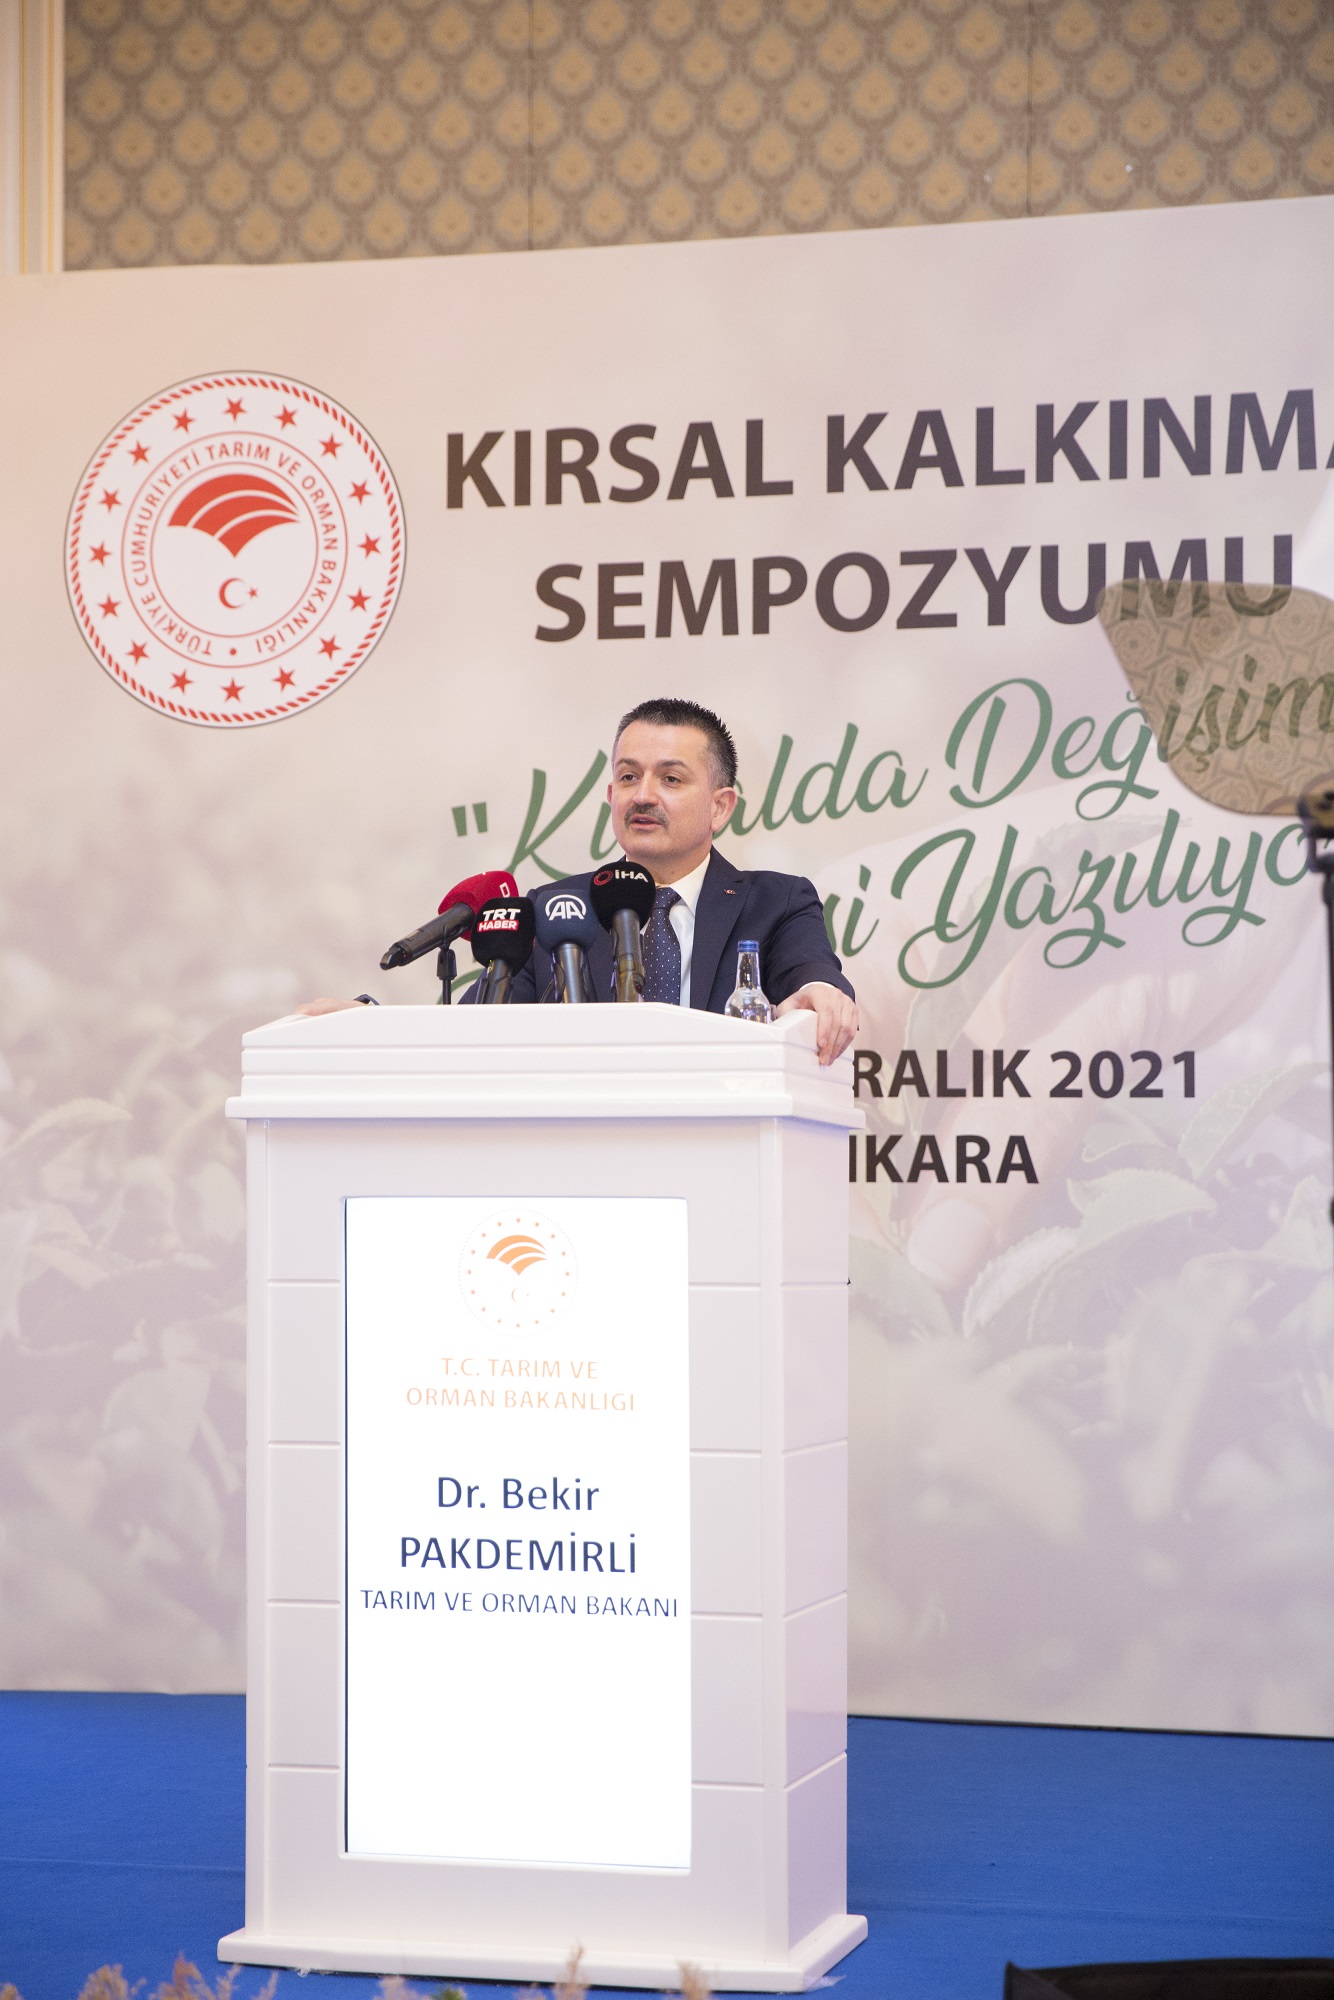 Rural Development Symposium (15-17 December 2021)